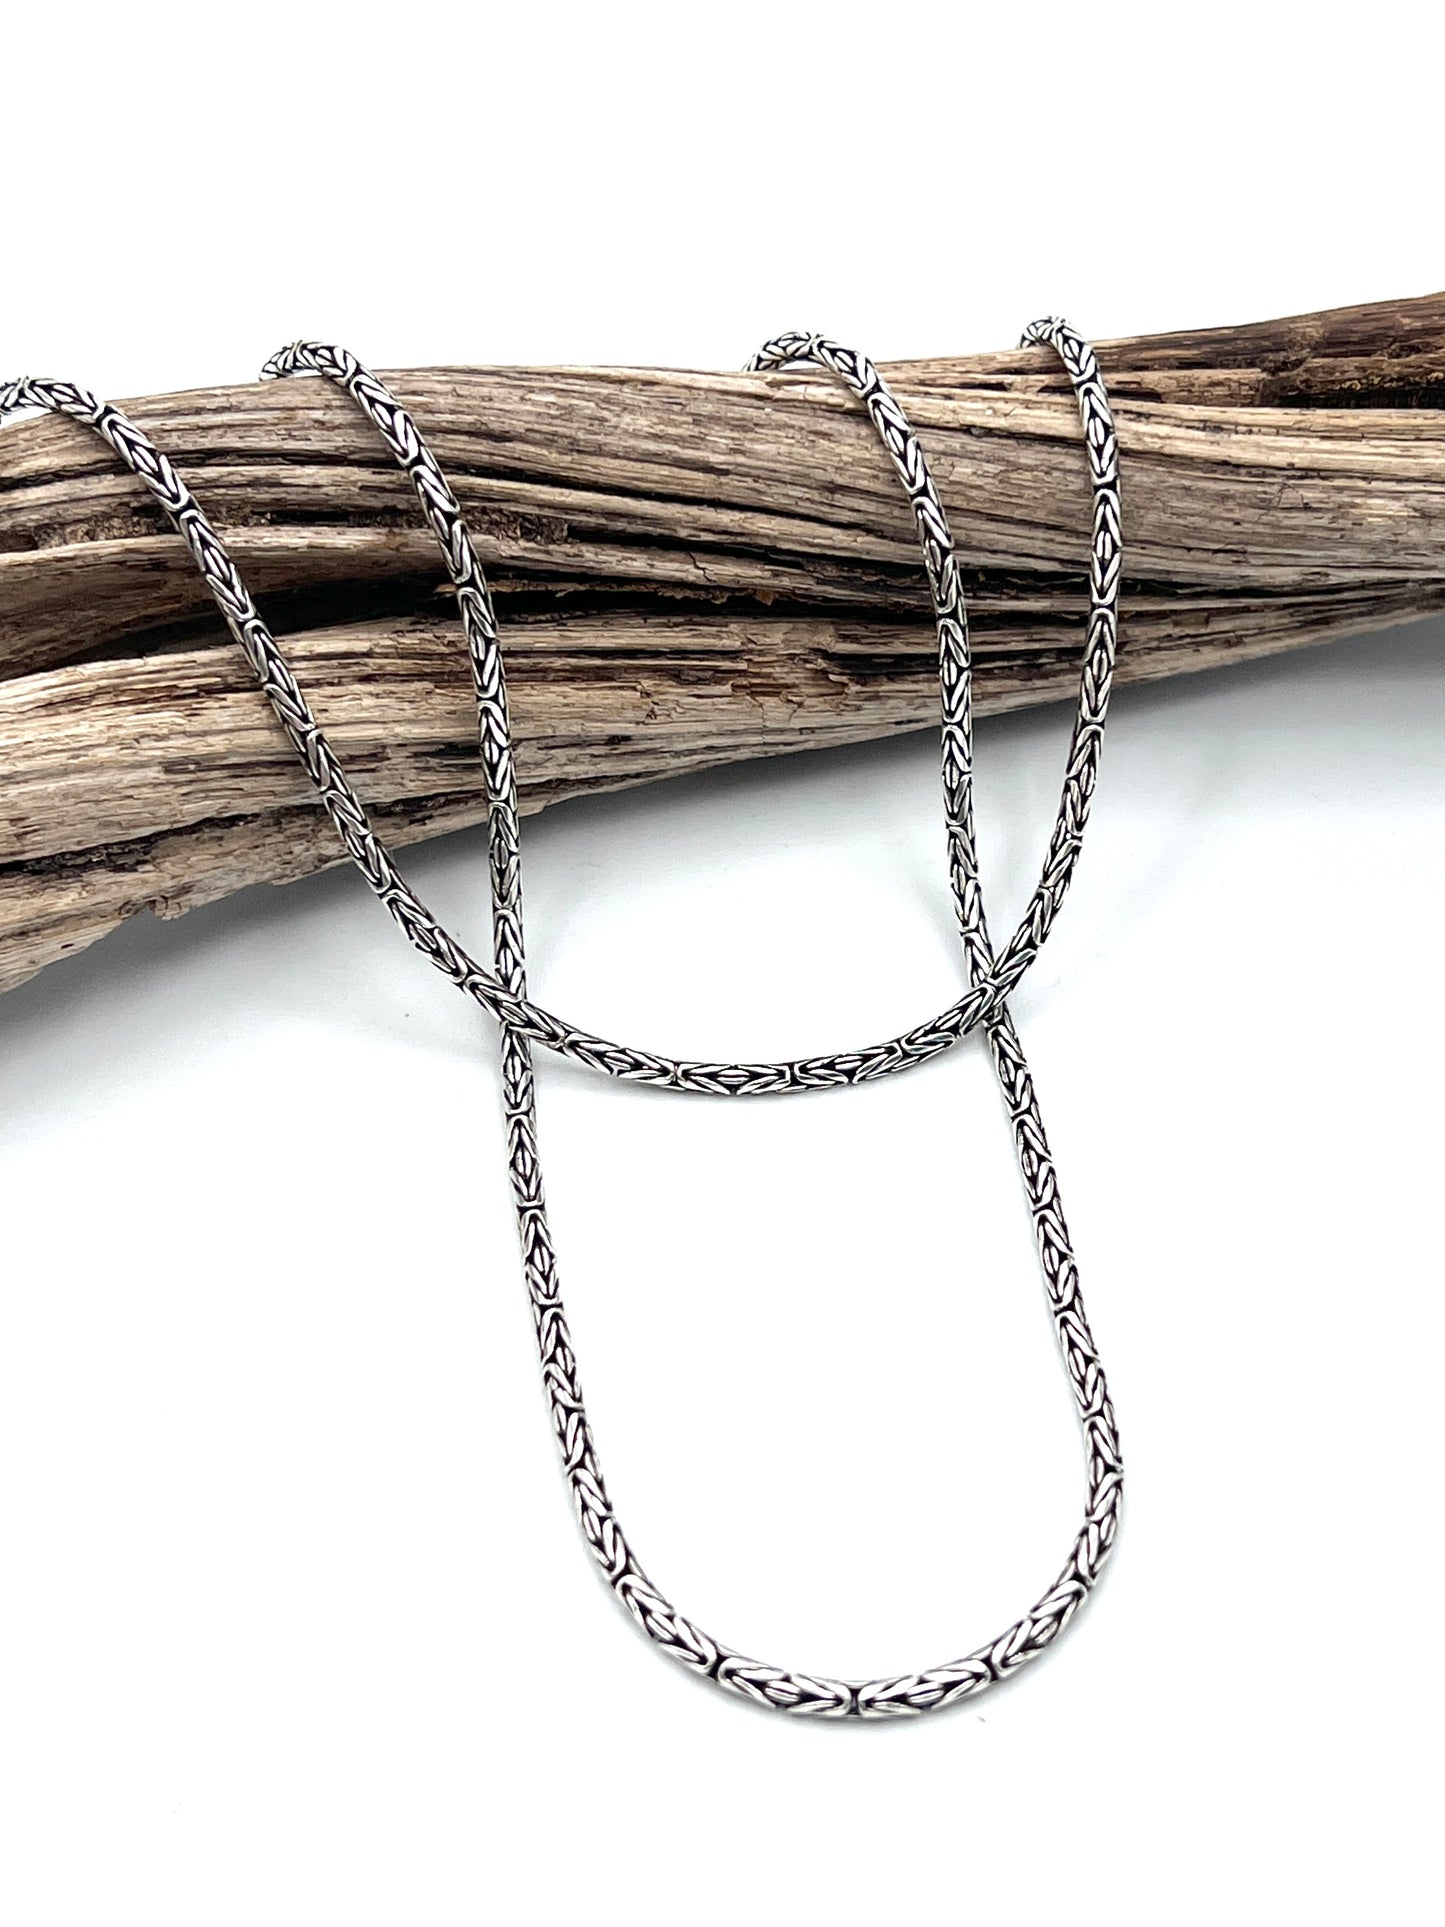 Byzantine Chain Necklaces